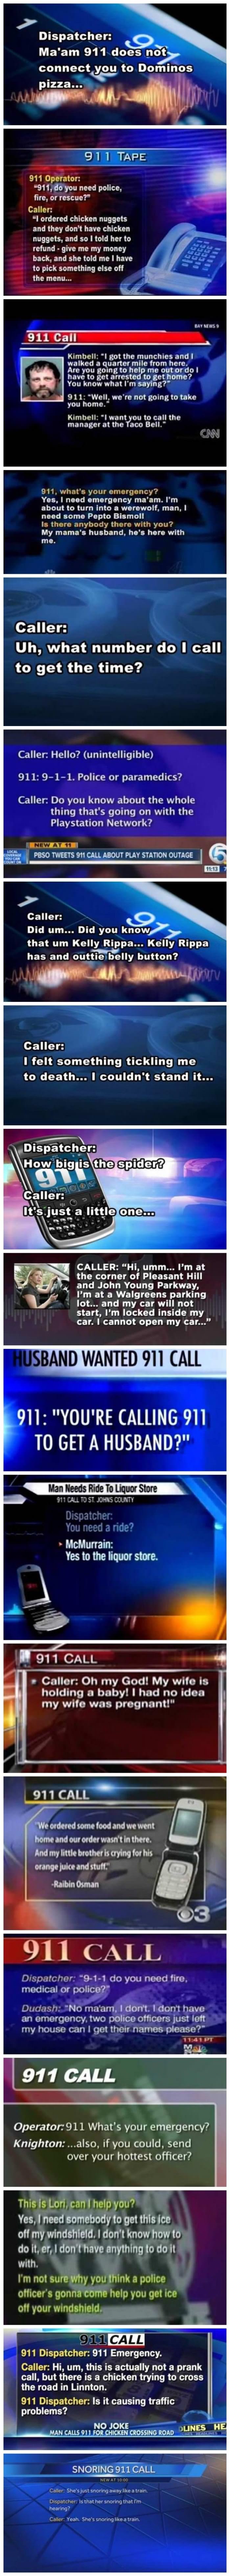 strange 911 calls funny picture